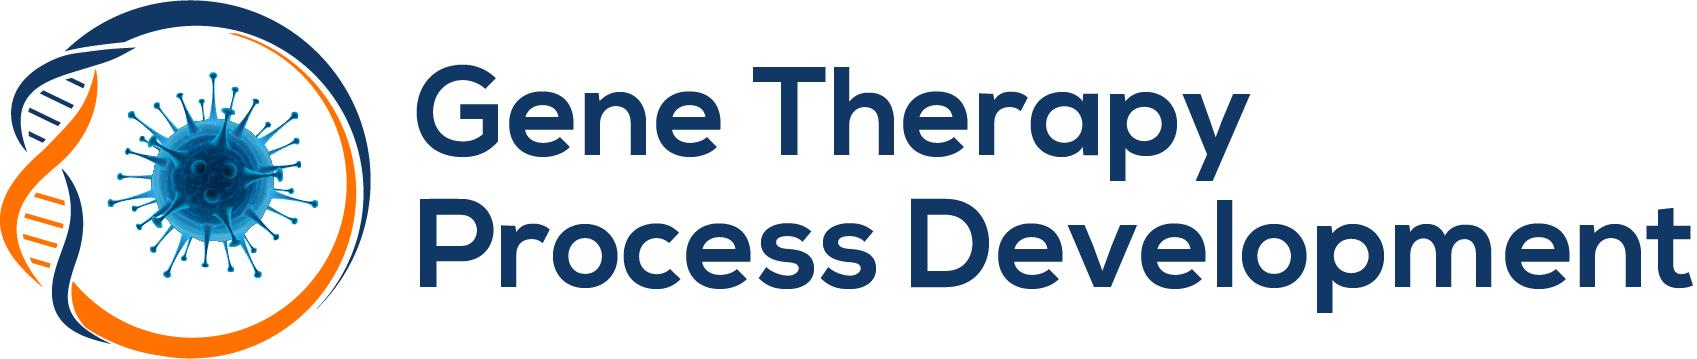 HW230816 Gene Therapy Process Development Summit logo